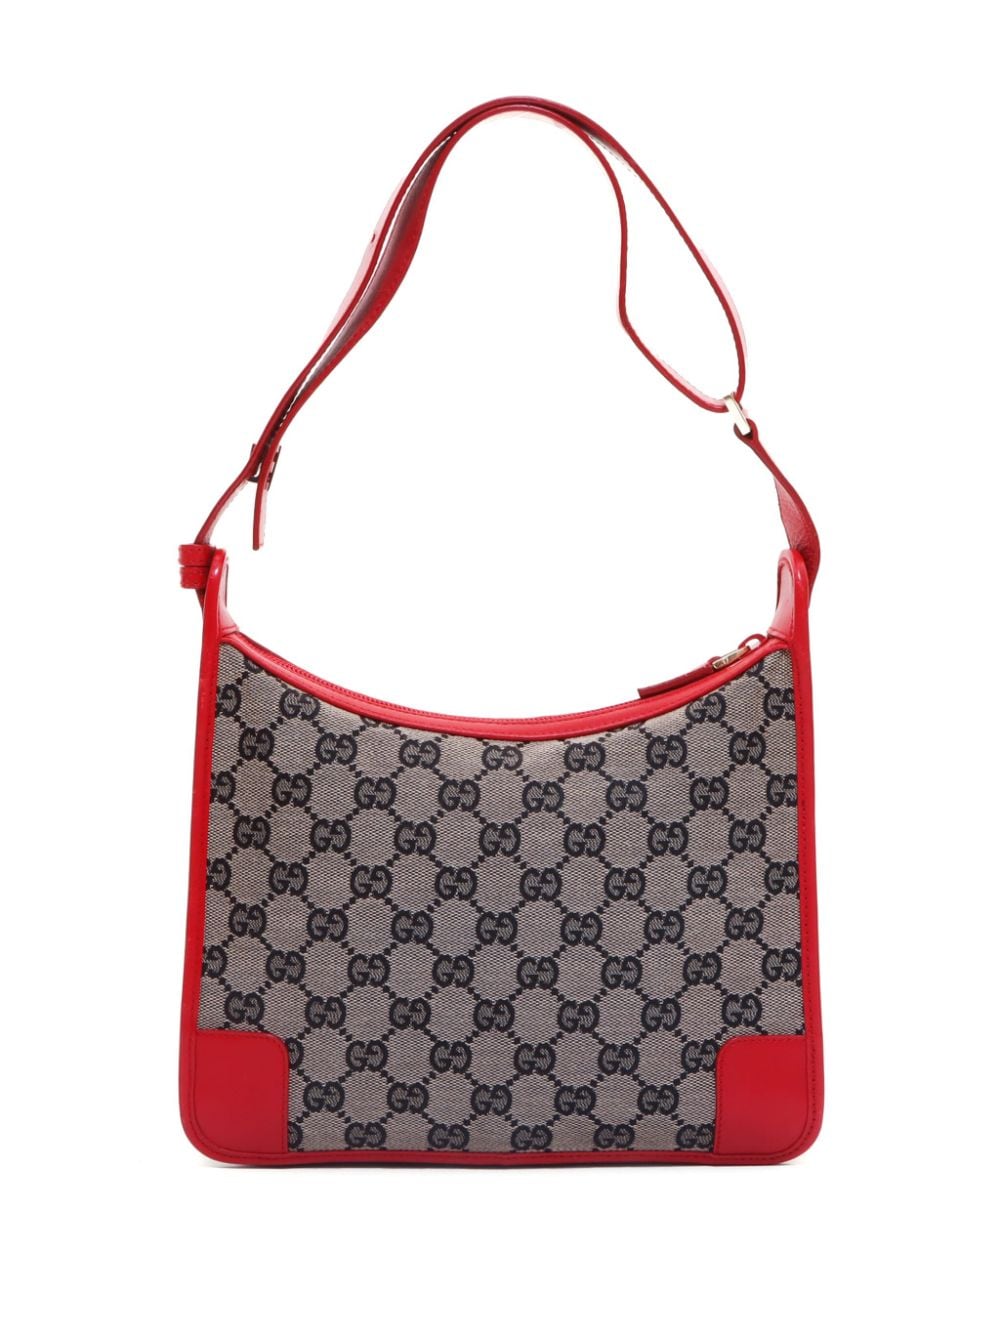 Gucci Pre-Owned GG canvas shoulder bag - Beige